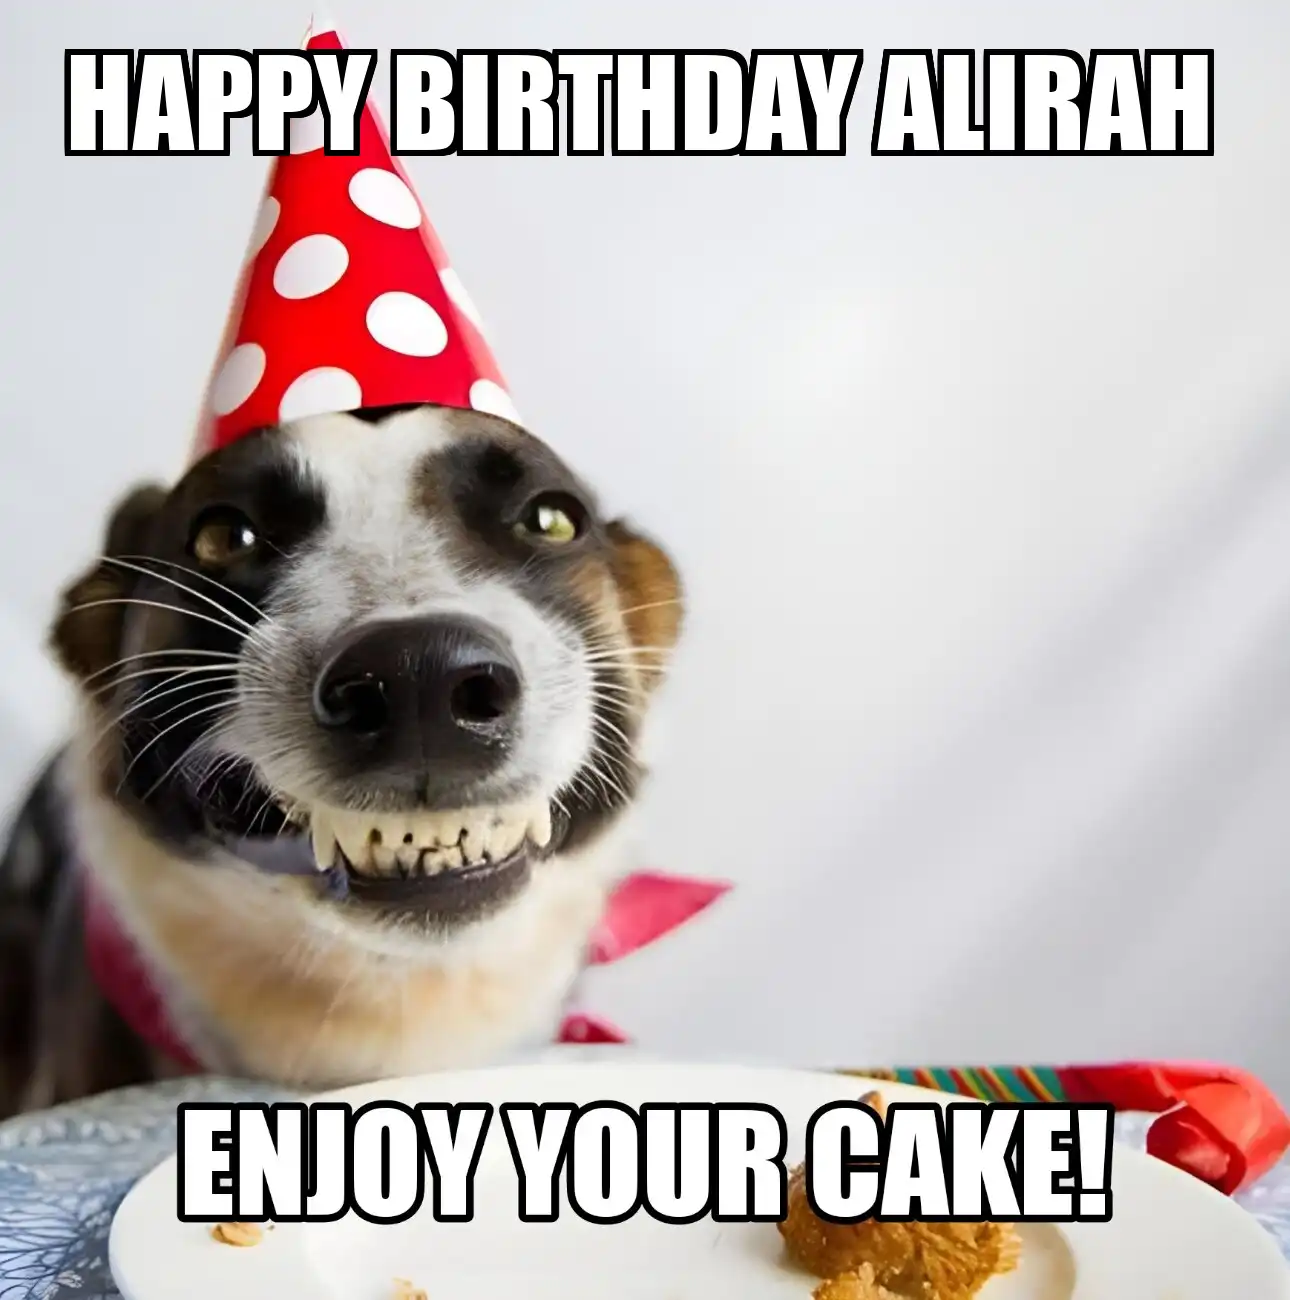 Happy Birthday Alirah Enjoy Your Cake Dog Meme